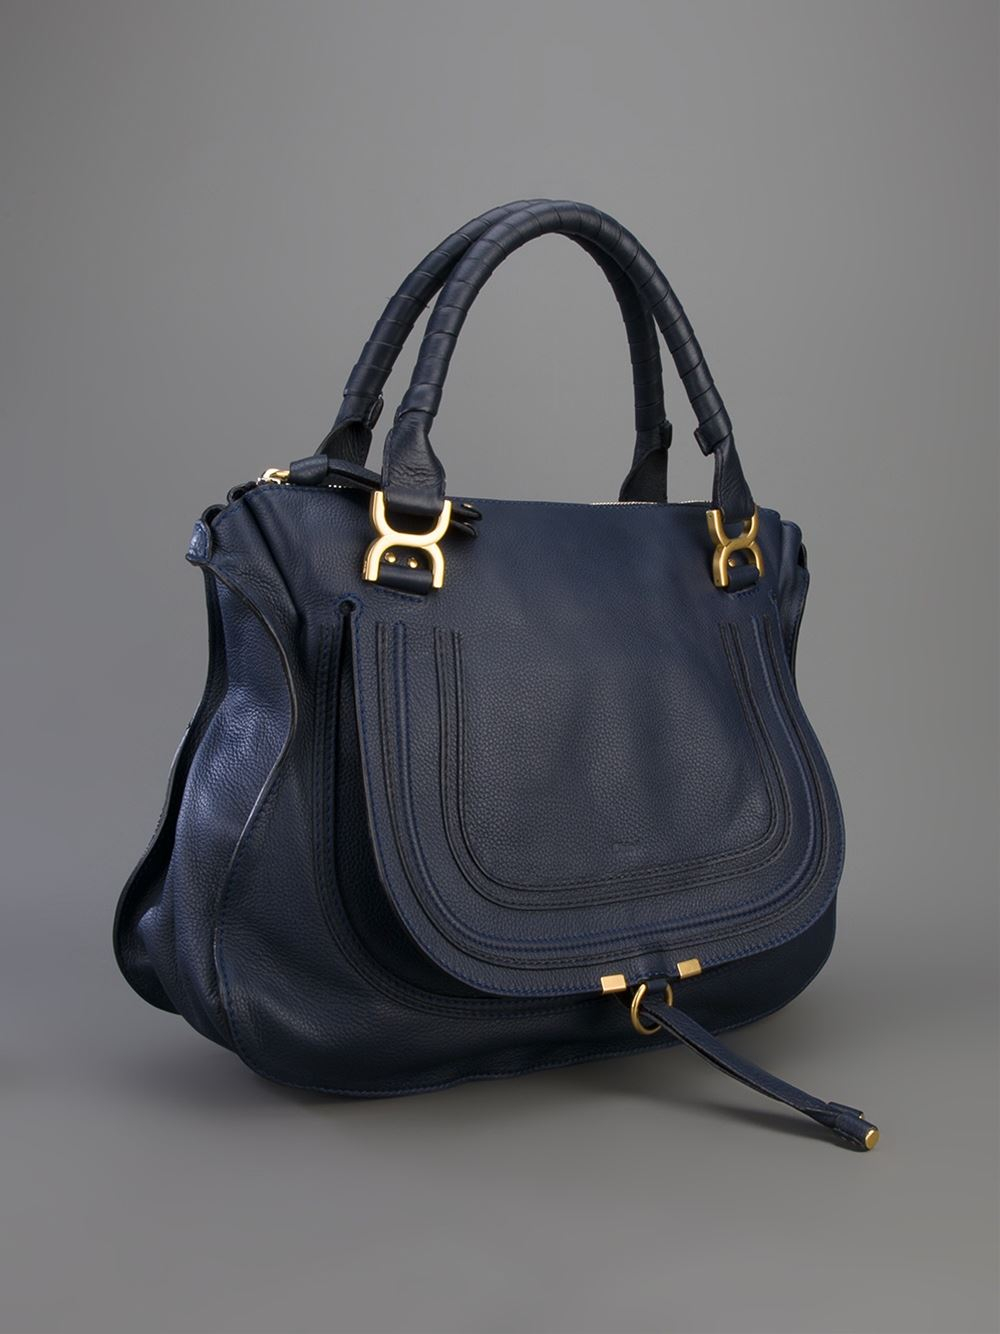 Chloé Marcie Tote Bag in Blue - Lyst